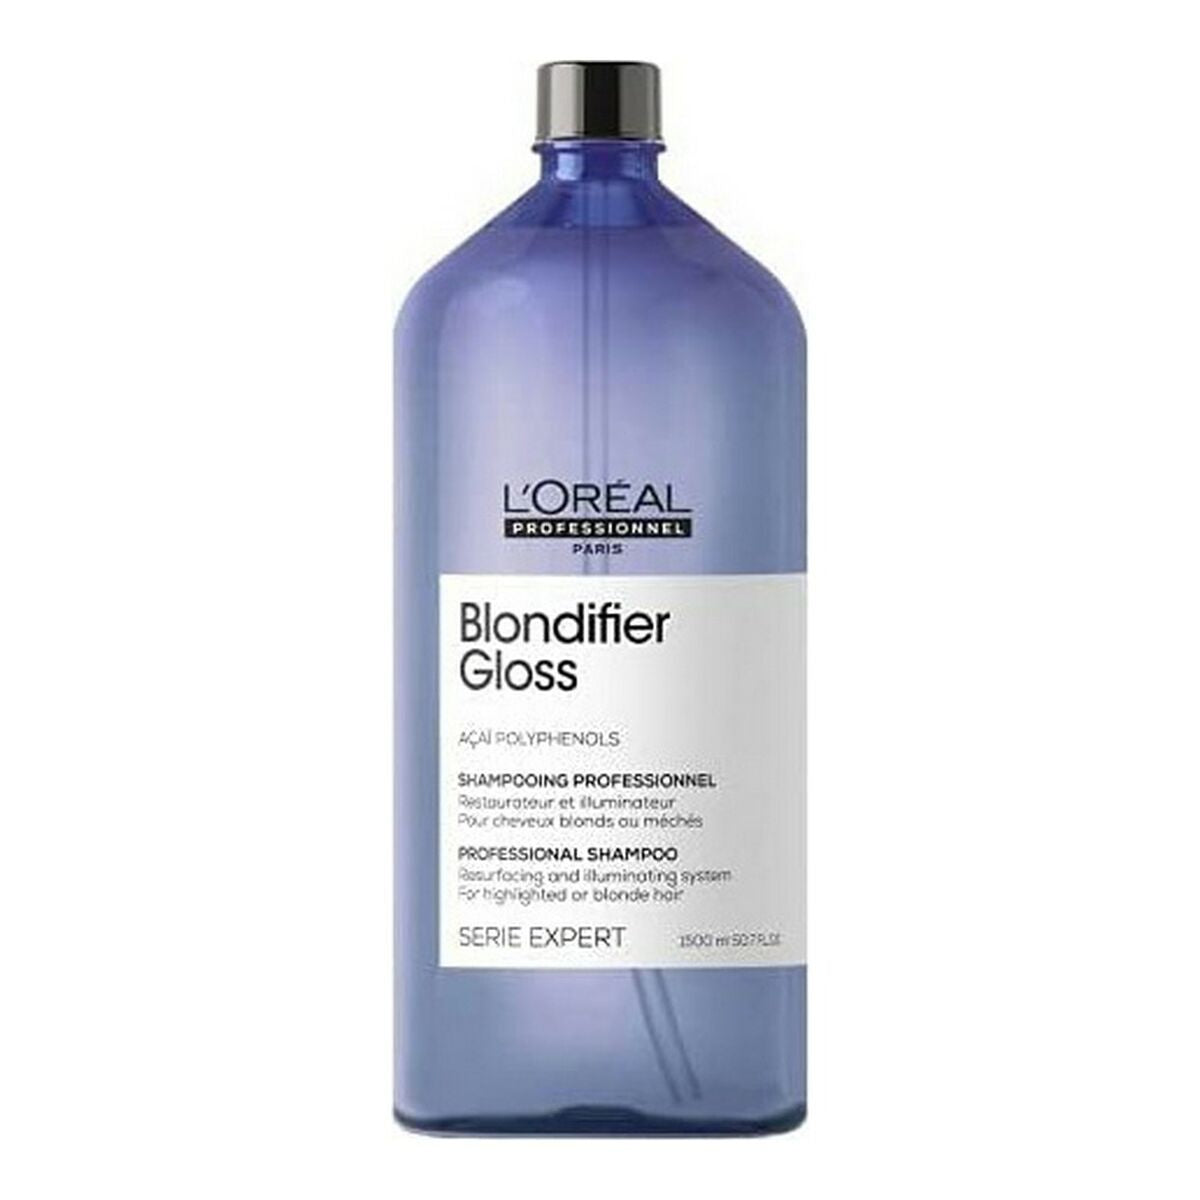 Shampoo Expert Blondifier Gloss Paris (1500 ml) Bricini Cosmetics